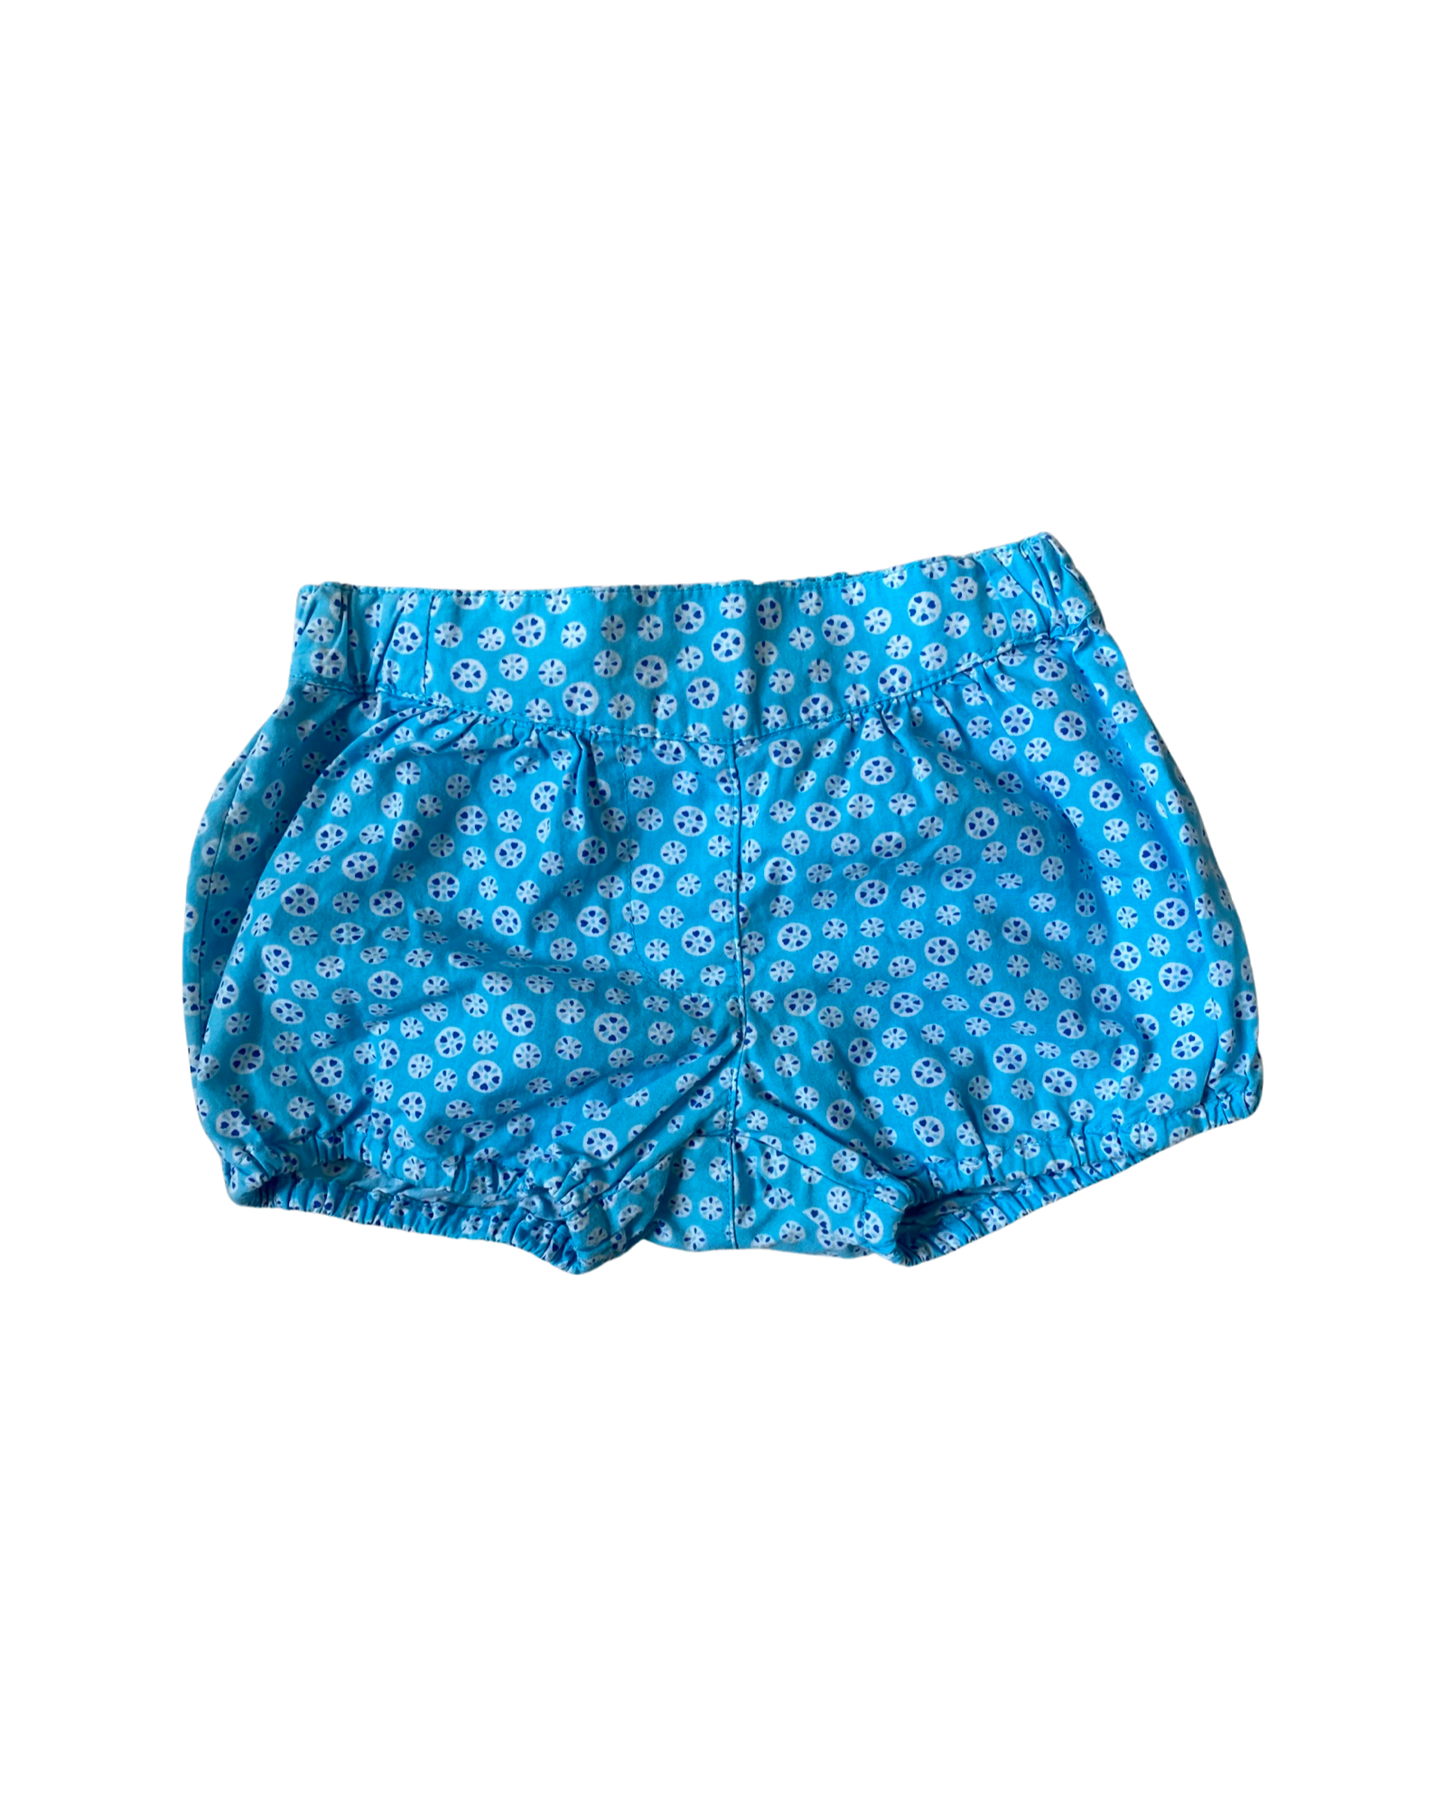 Benetton printed bubble shorts (size 6-9mths)